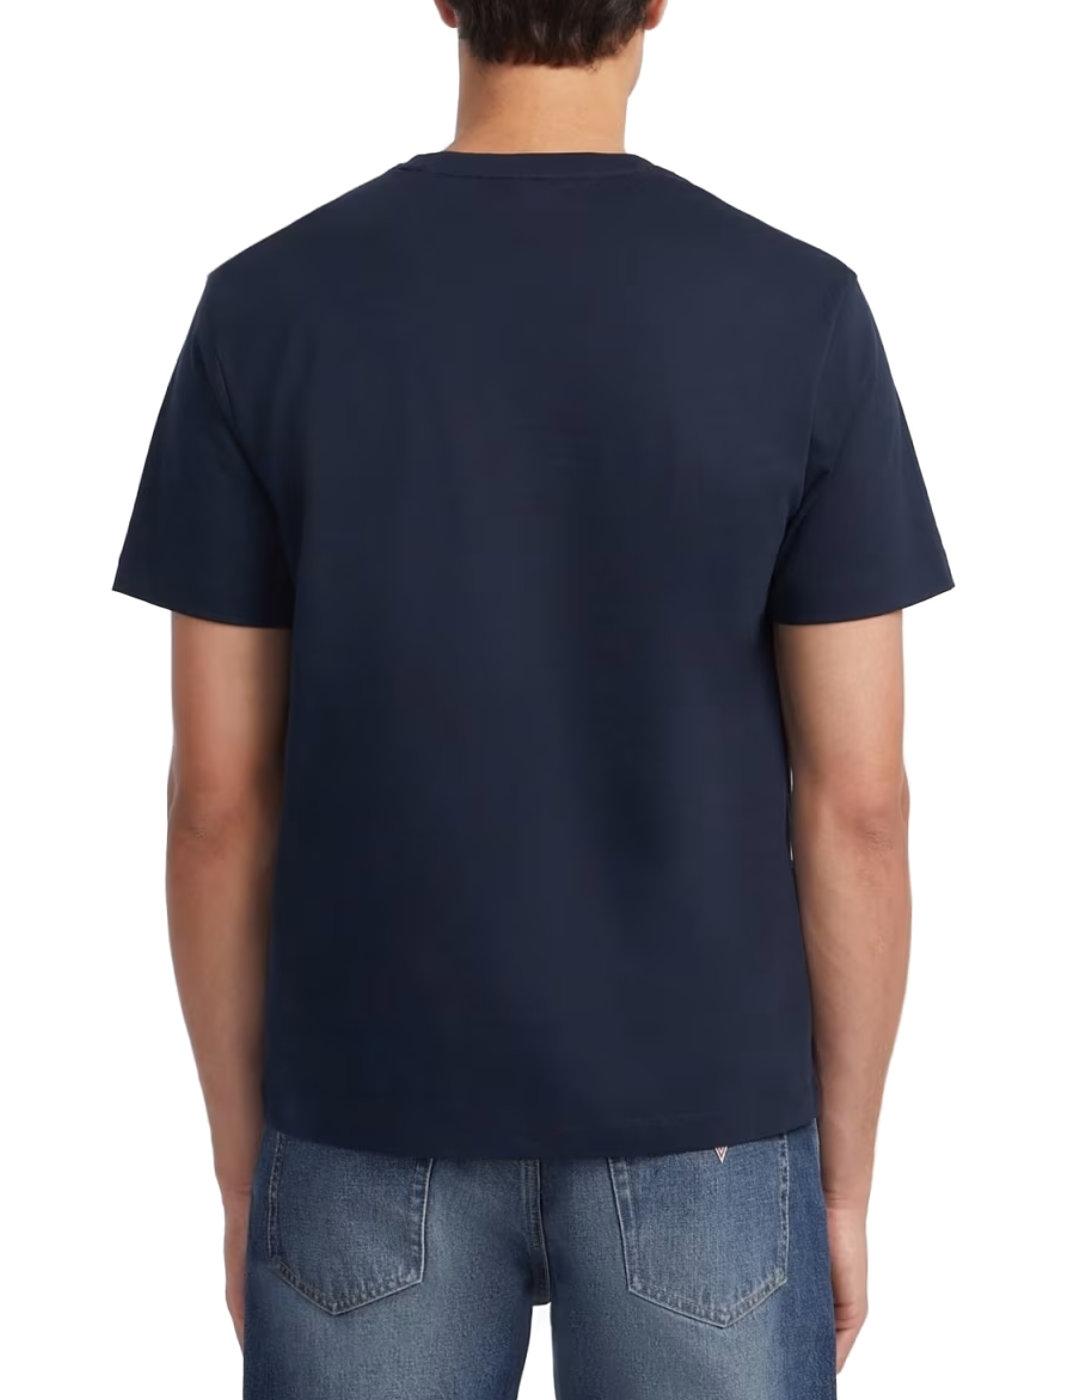 Camiseta Guess Jeans marino manga corta para hombre